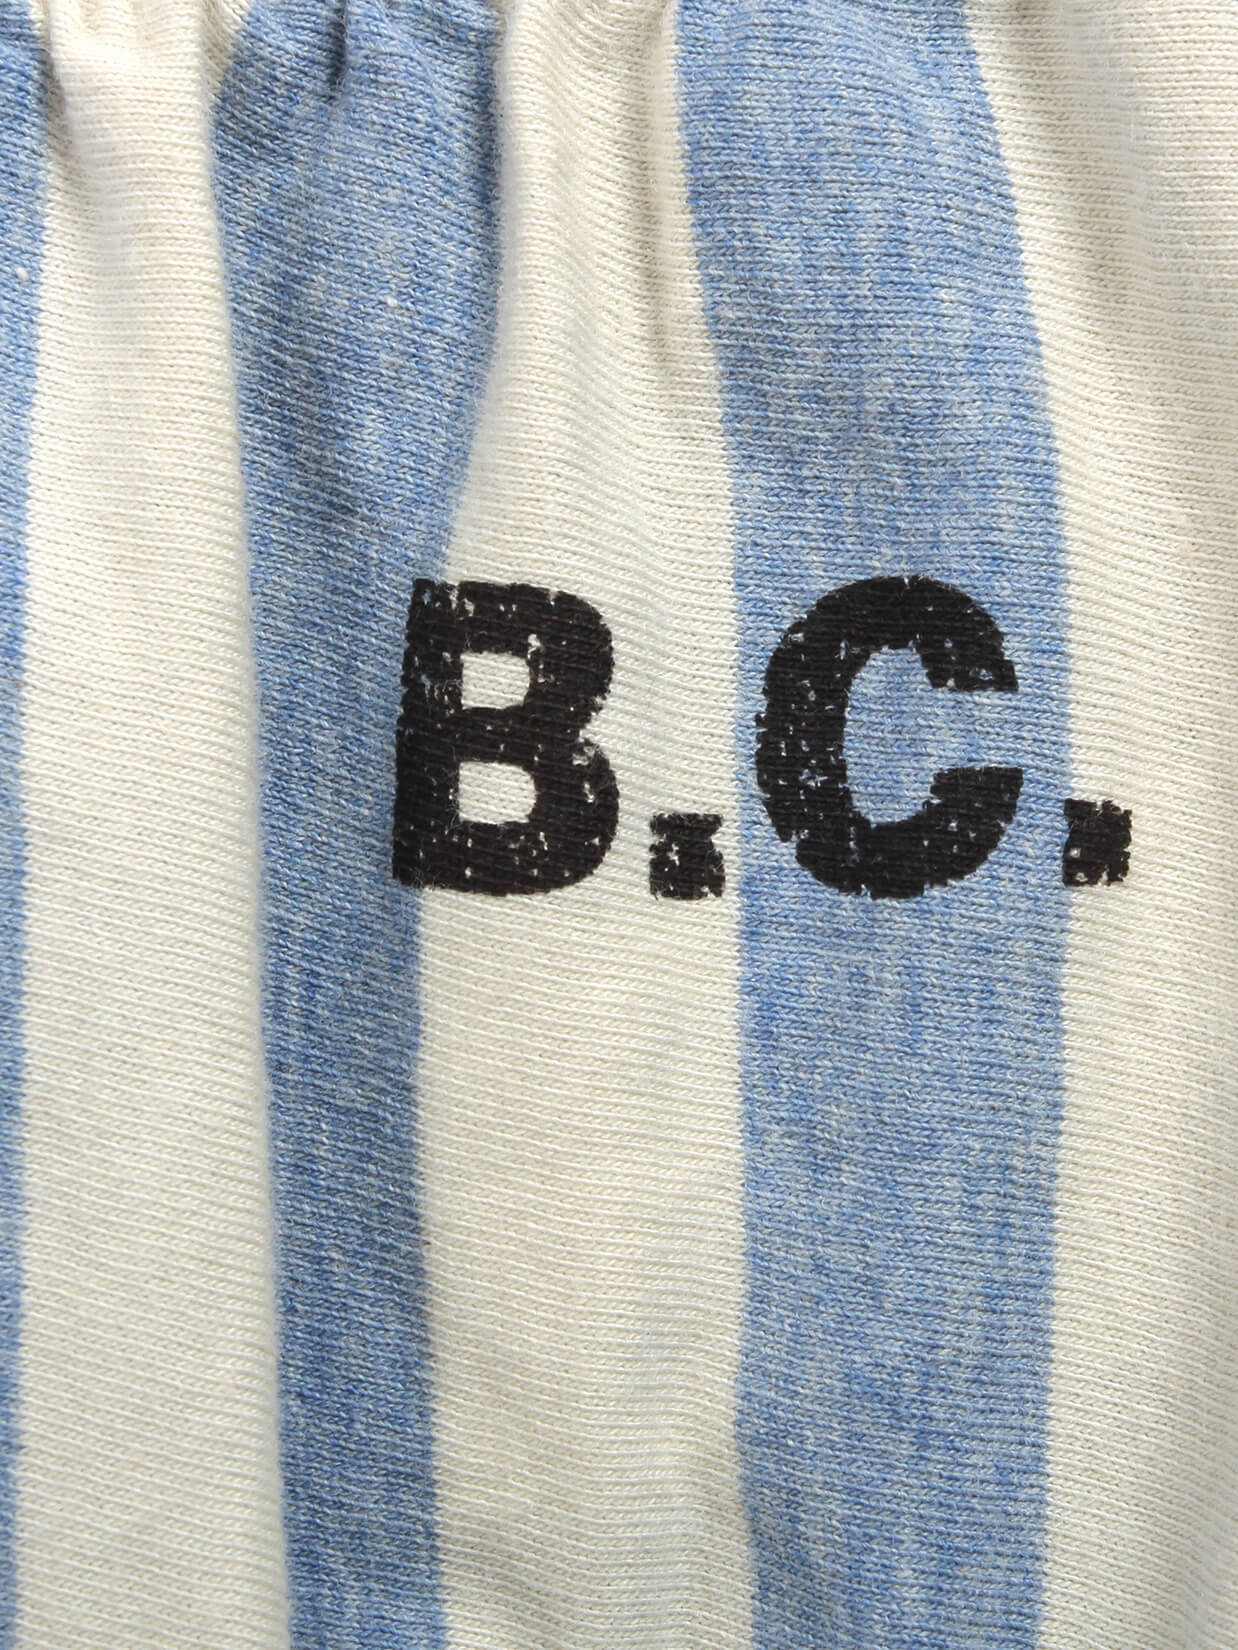 B.C stripes bloomer